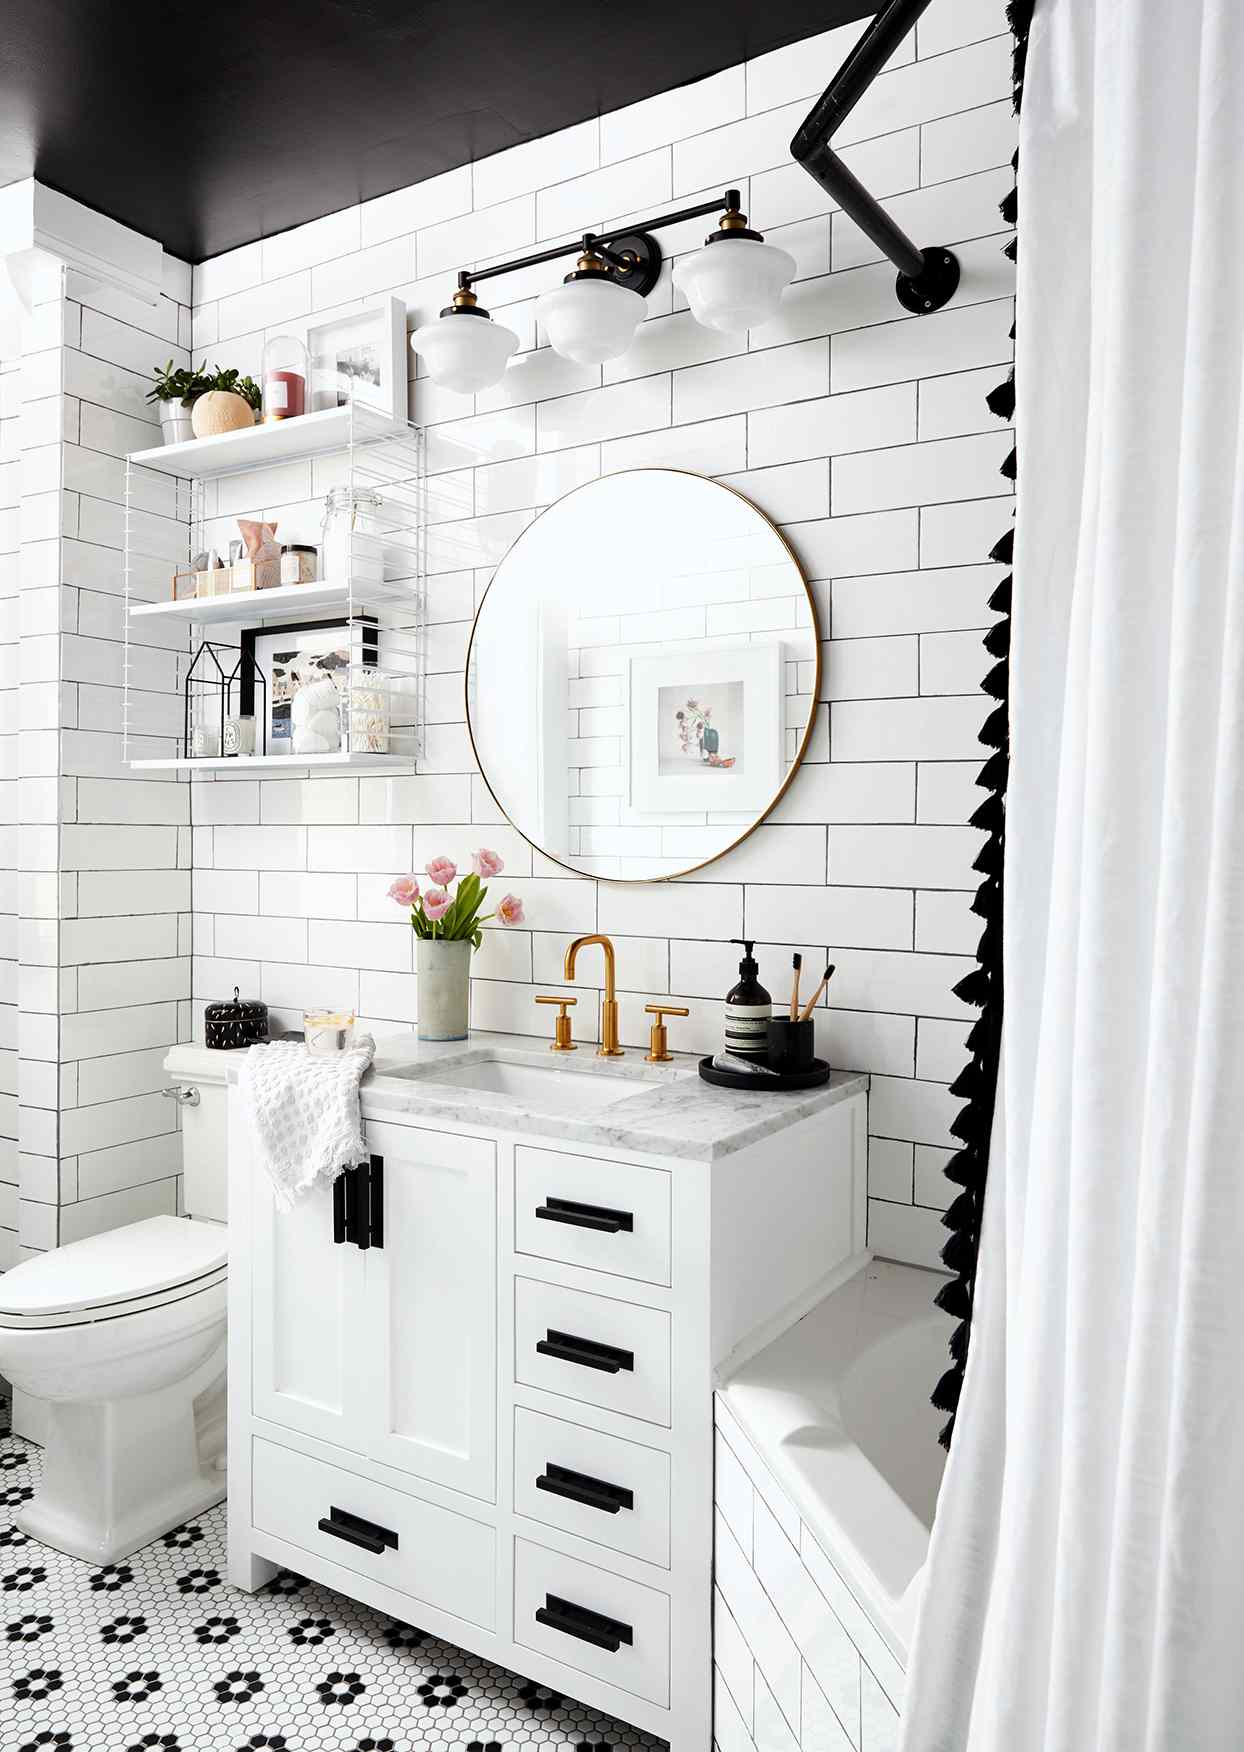 19 Small Bathroom Vanity Ideas That, Bathroom Cabinet For Narrow Spaces